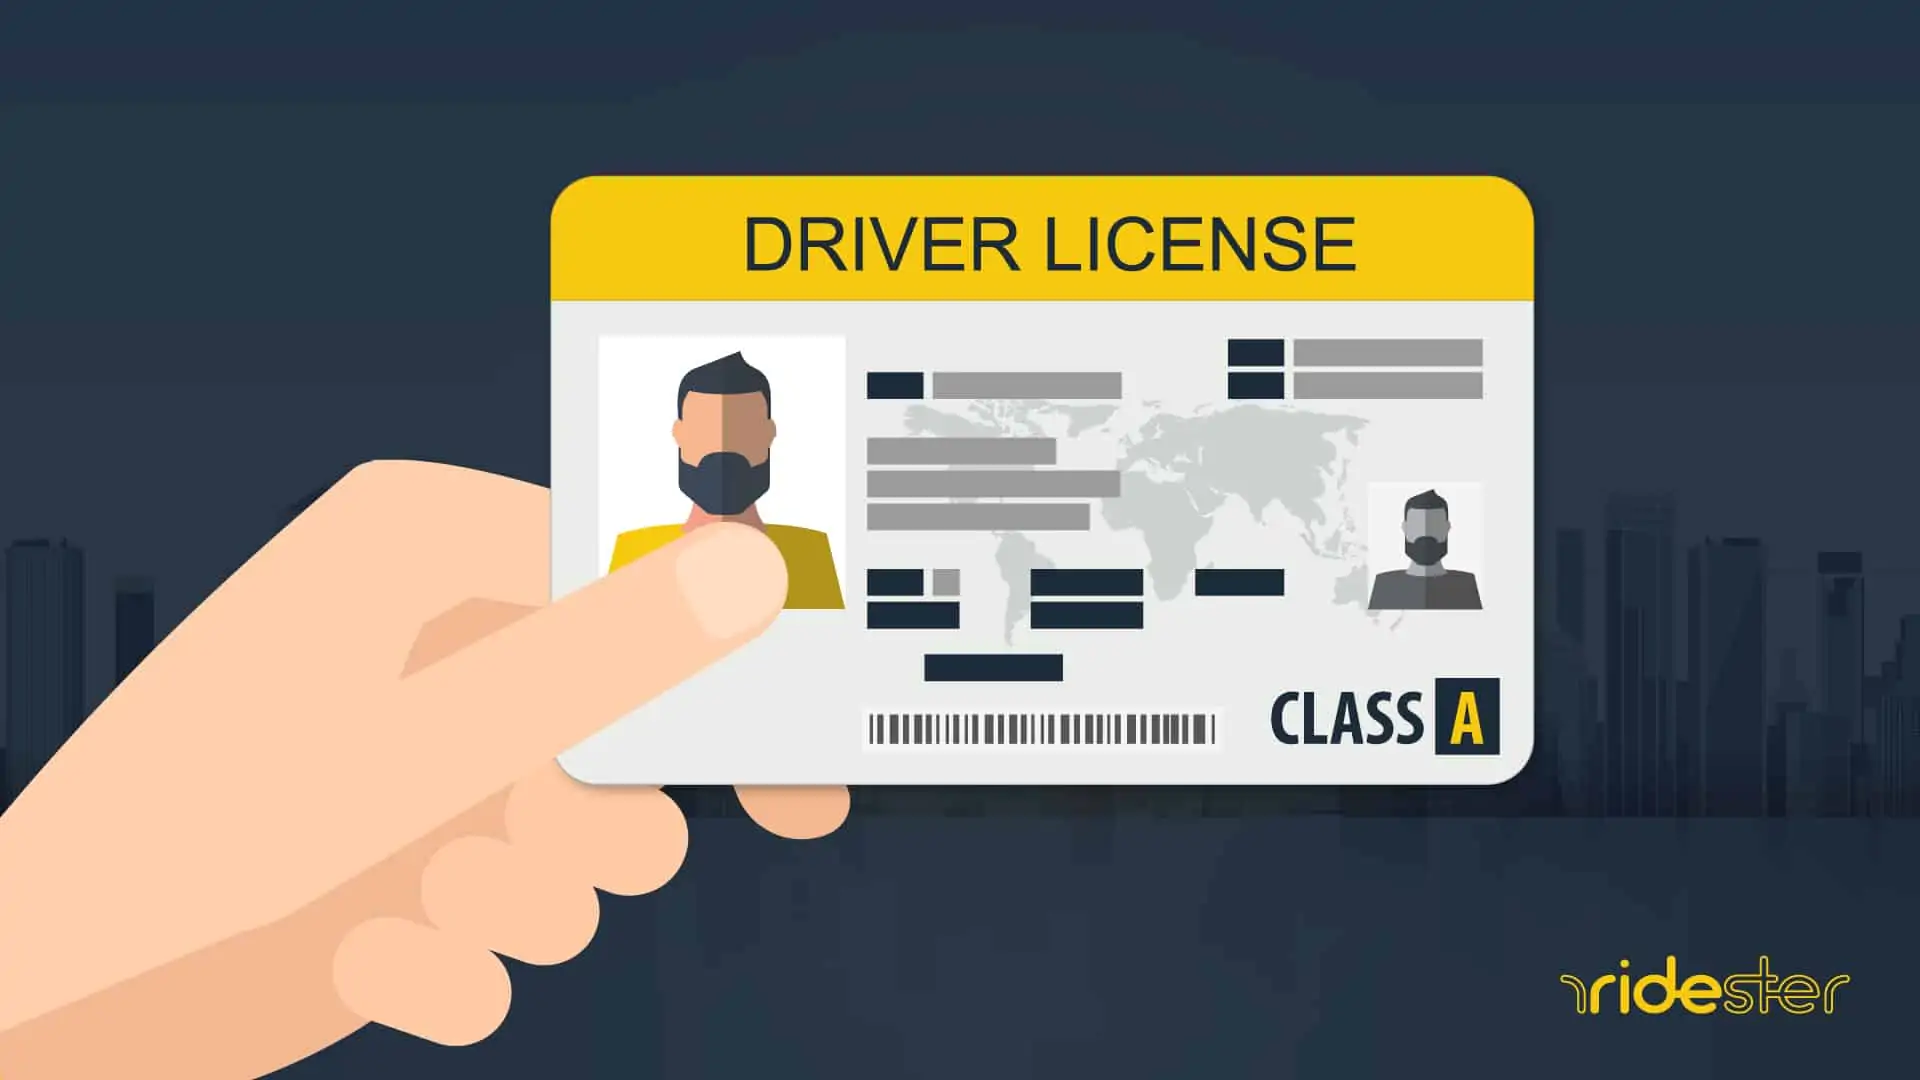 a man's hand holding a class a license